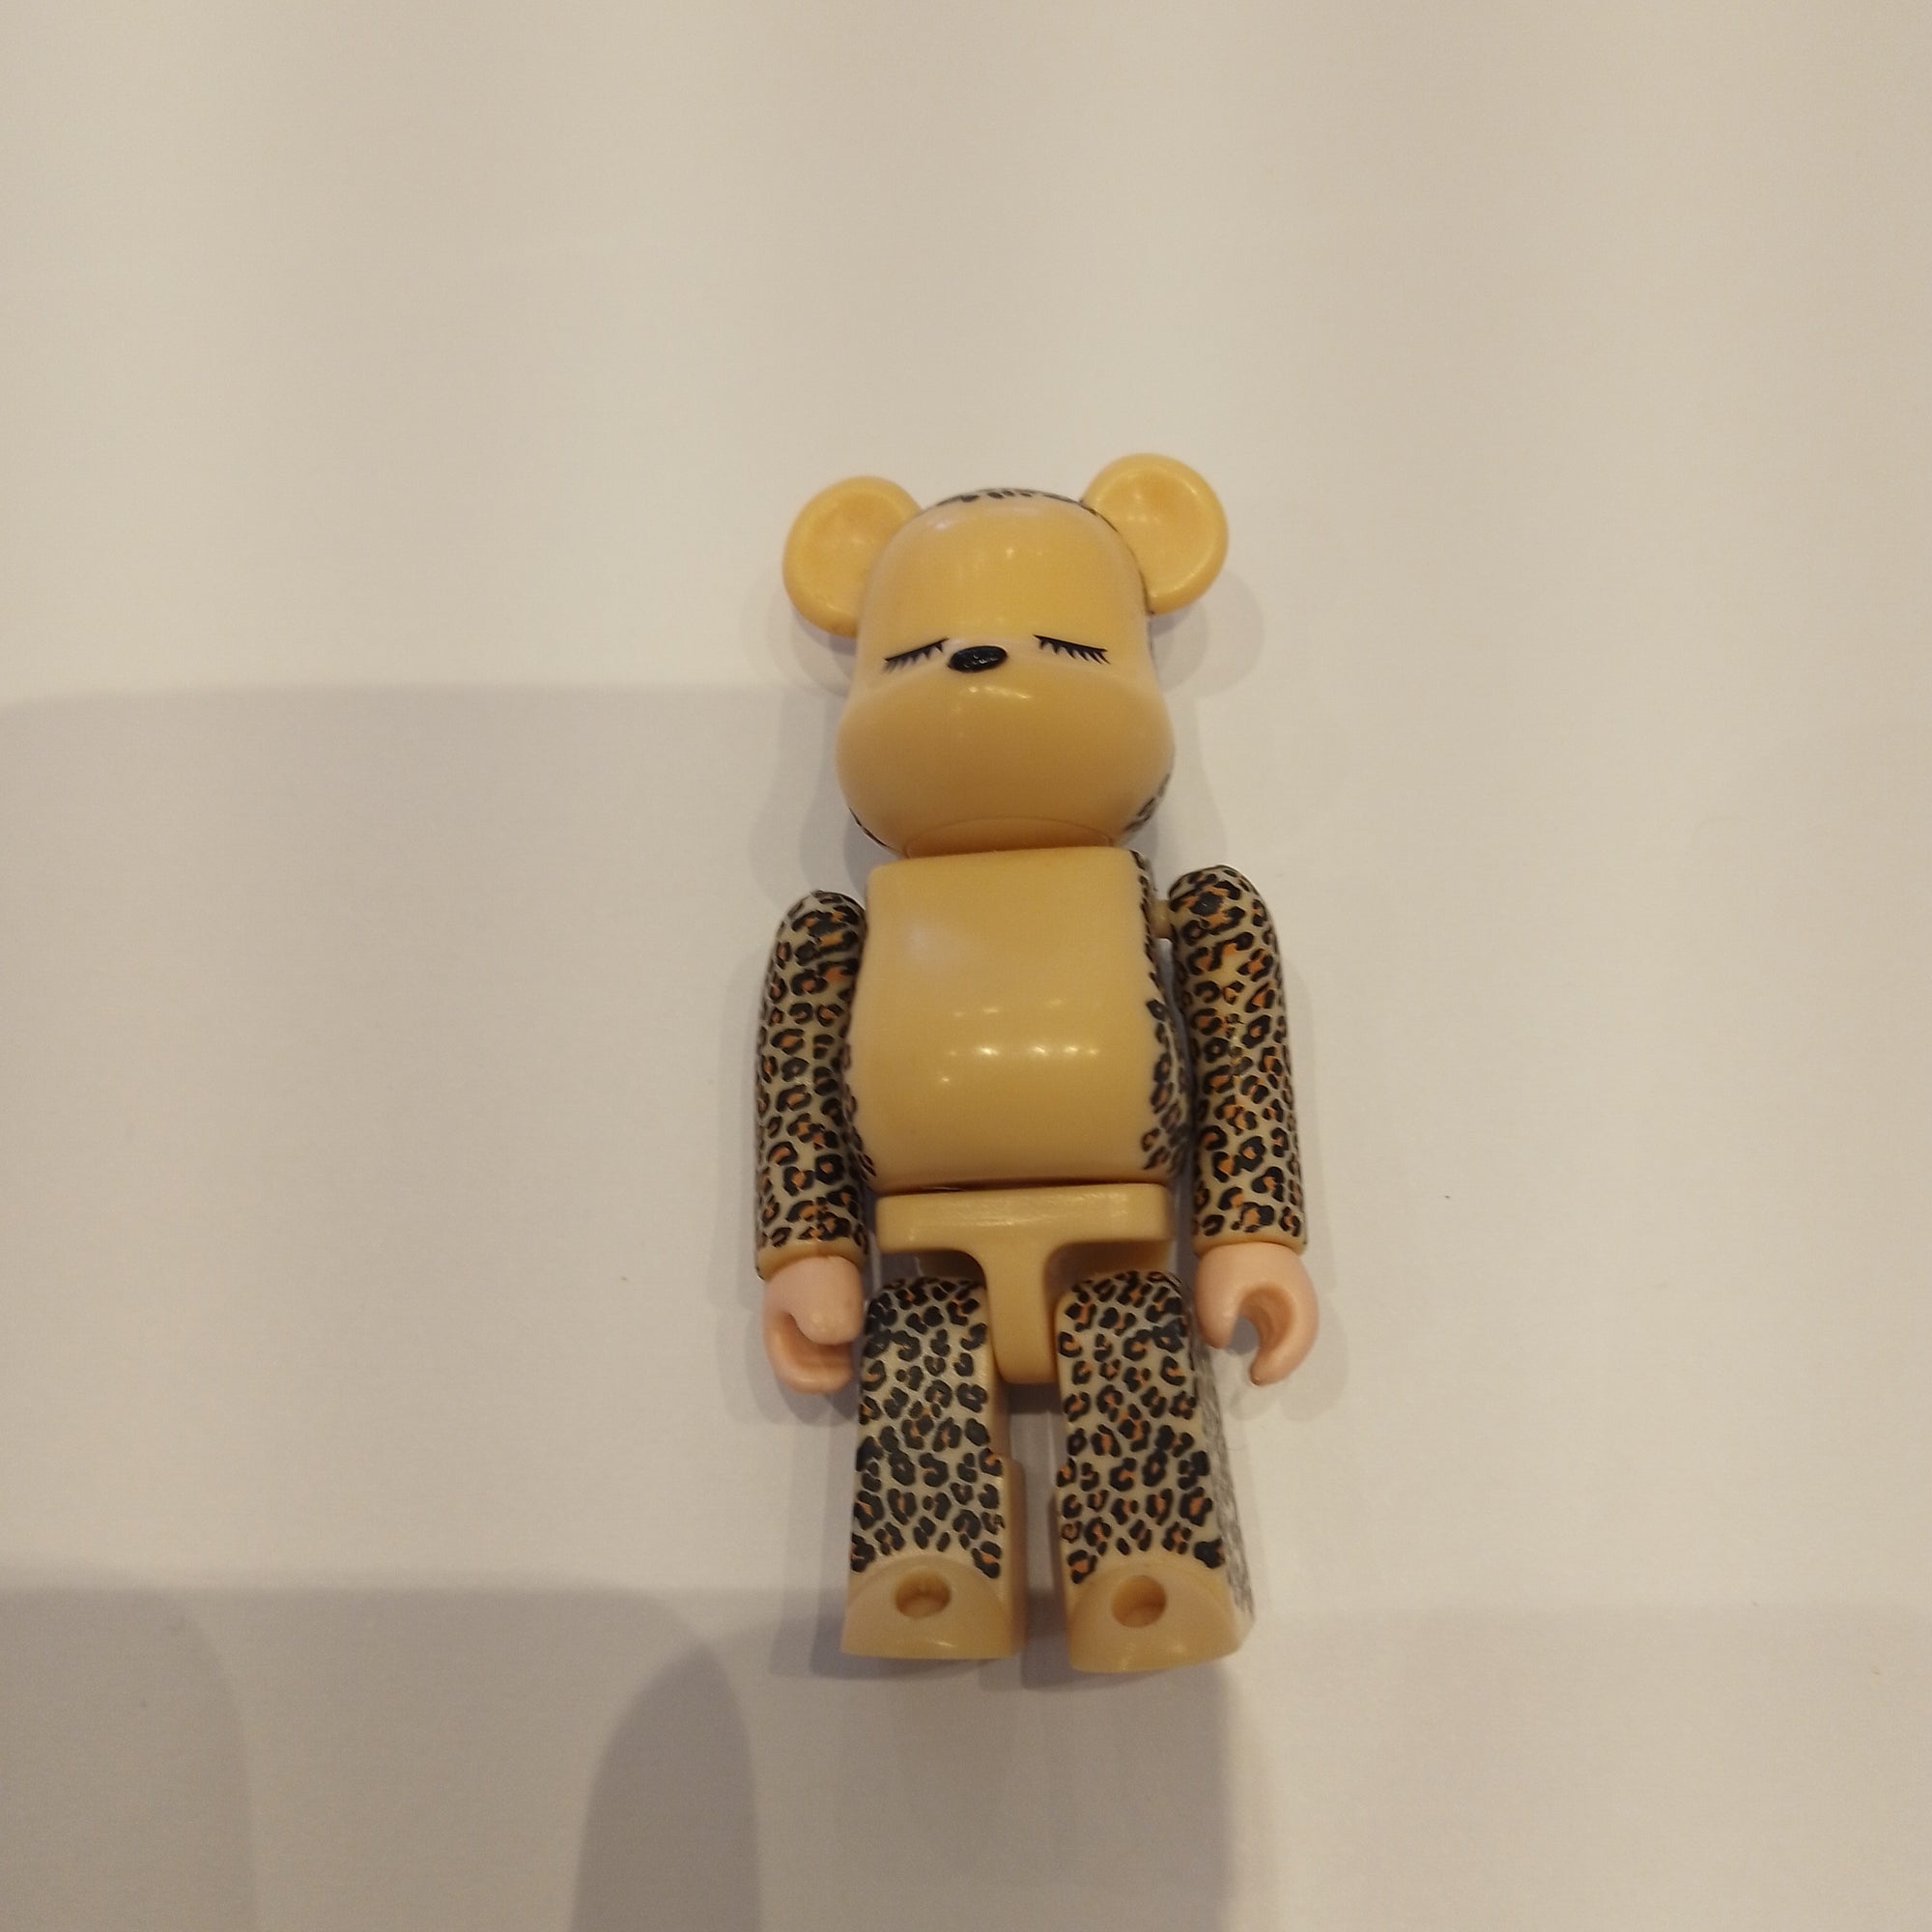 Animal - Bearbrick Series 2 by Medicom Toy